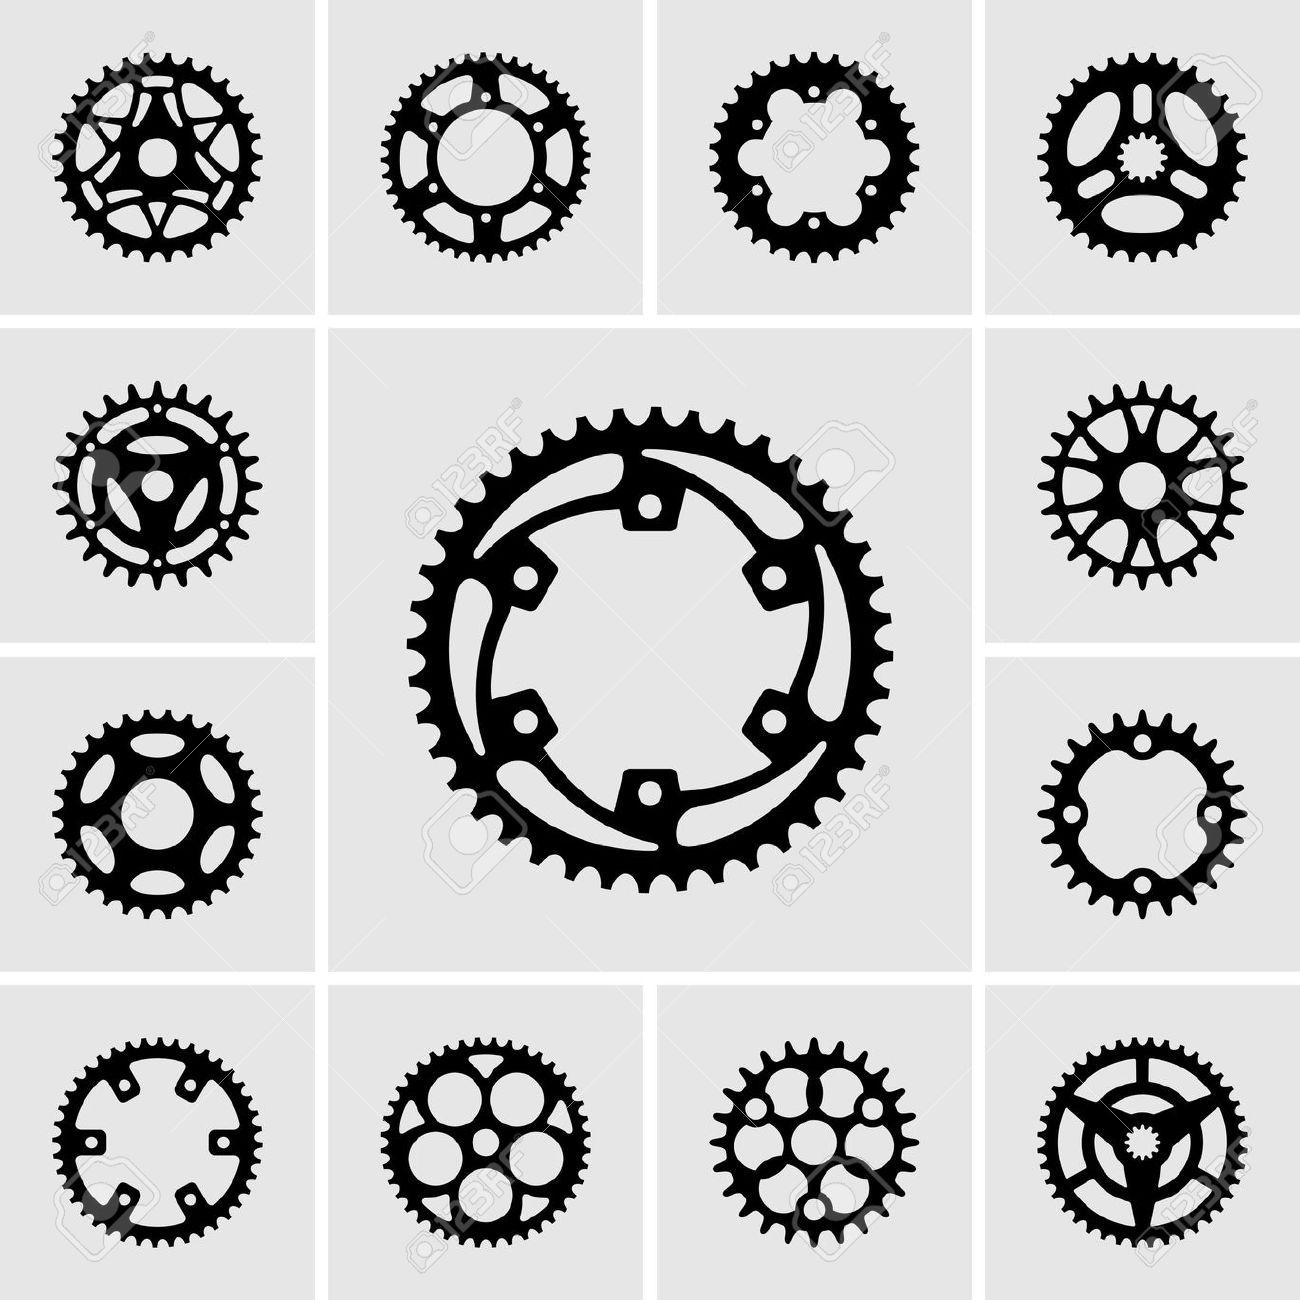 Heart in Bike Gear | Bicycle Designs by Custom Tags